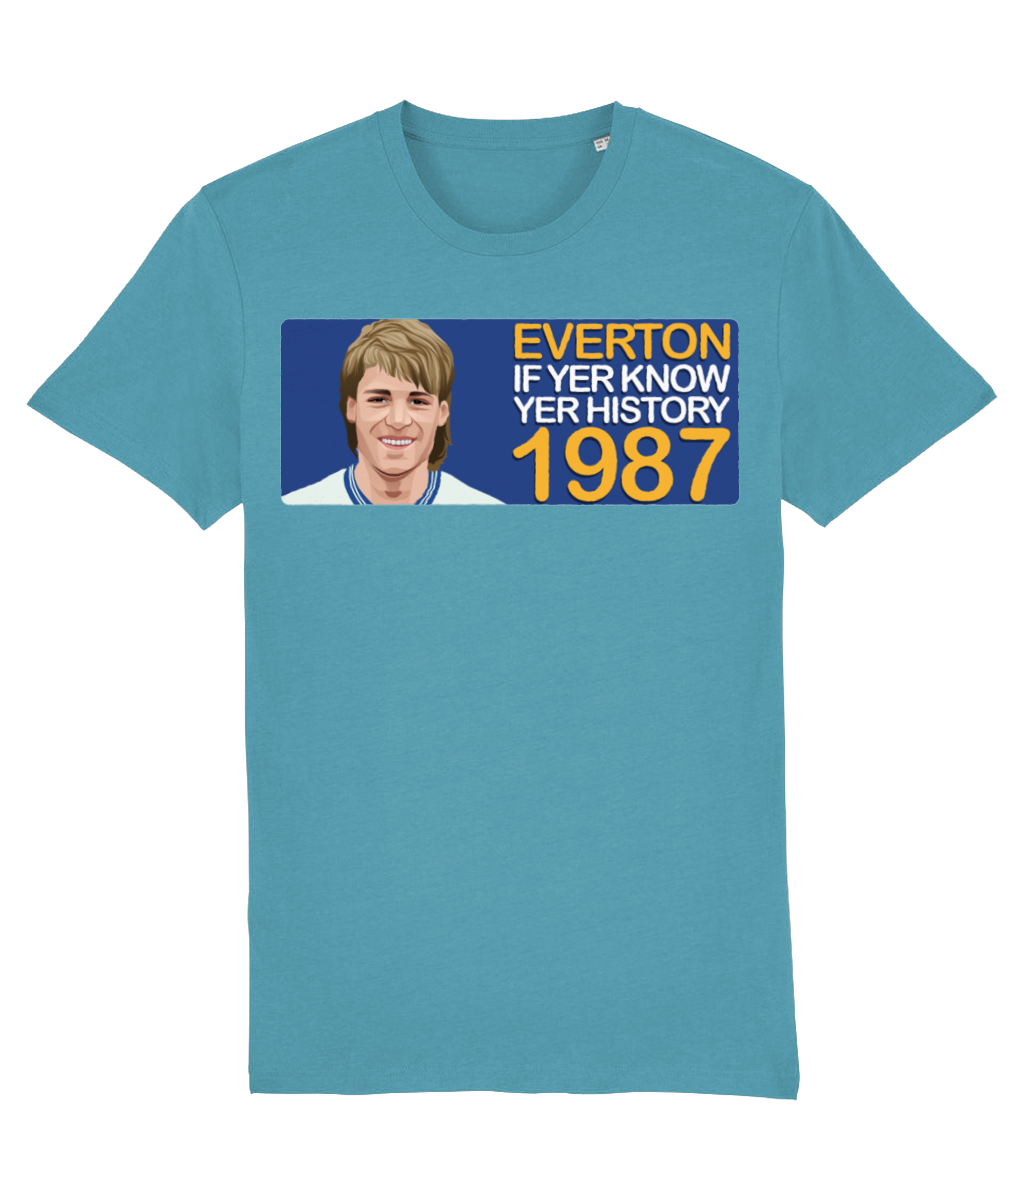 Everton 1987 Pat van den Hauwe If Yer Know Yer History Unisex T-Shirt Stanley/Stella Retrotext Atlantic Blue XX-Small 